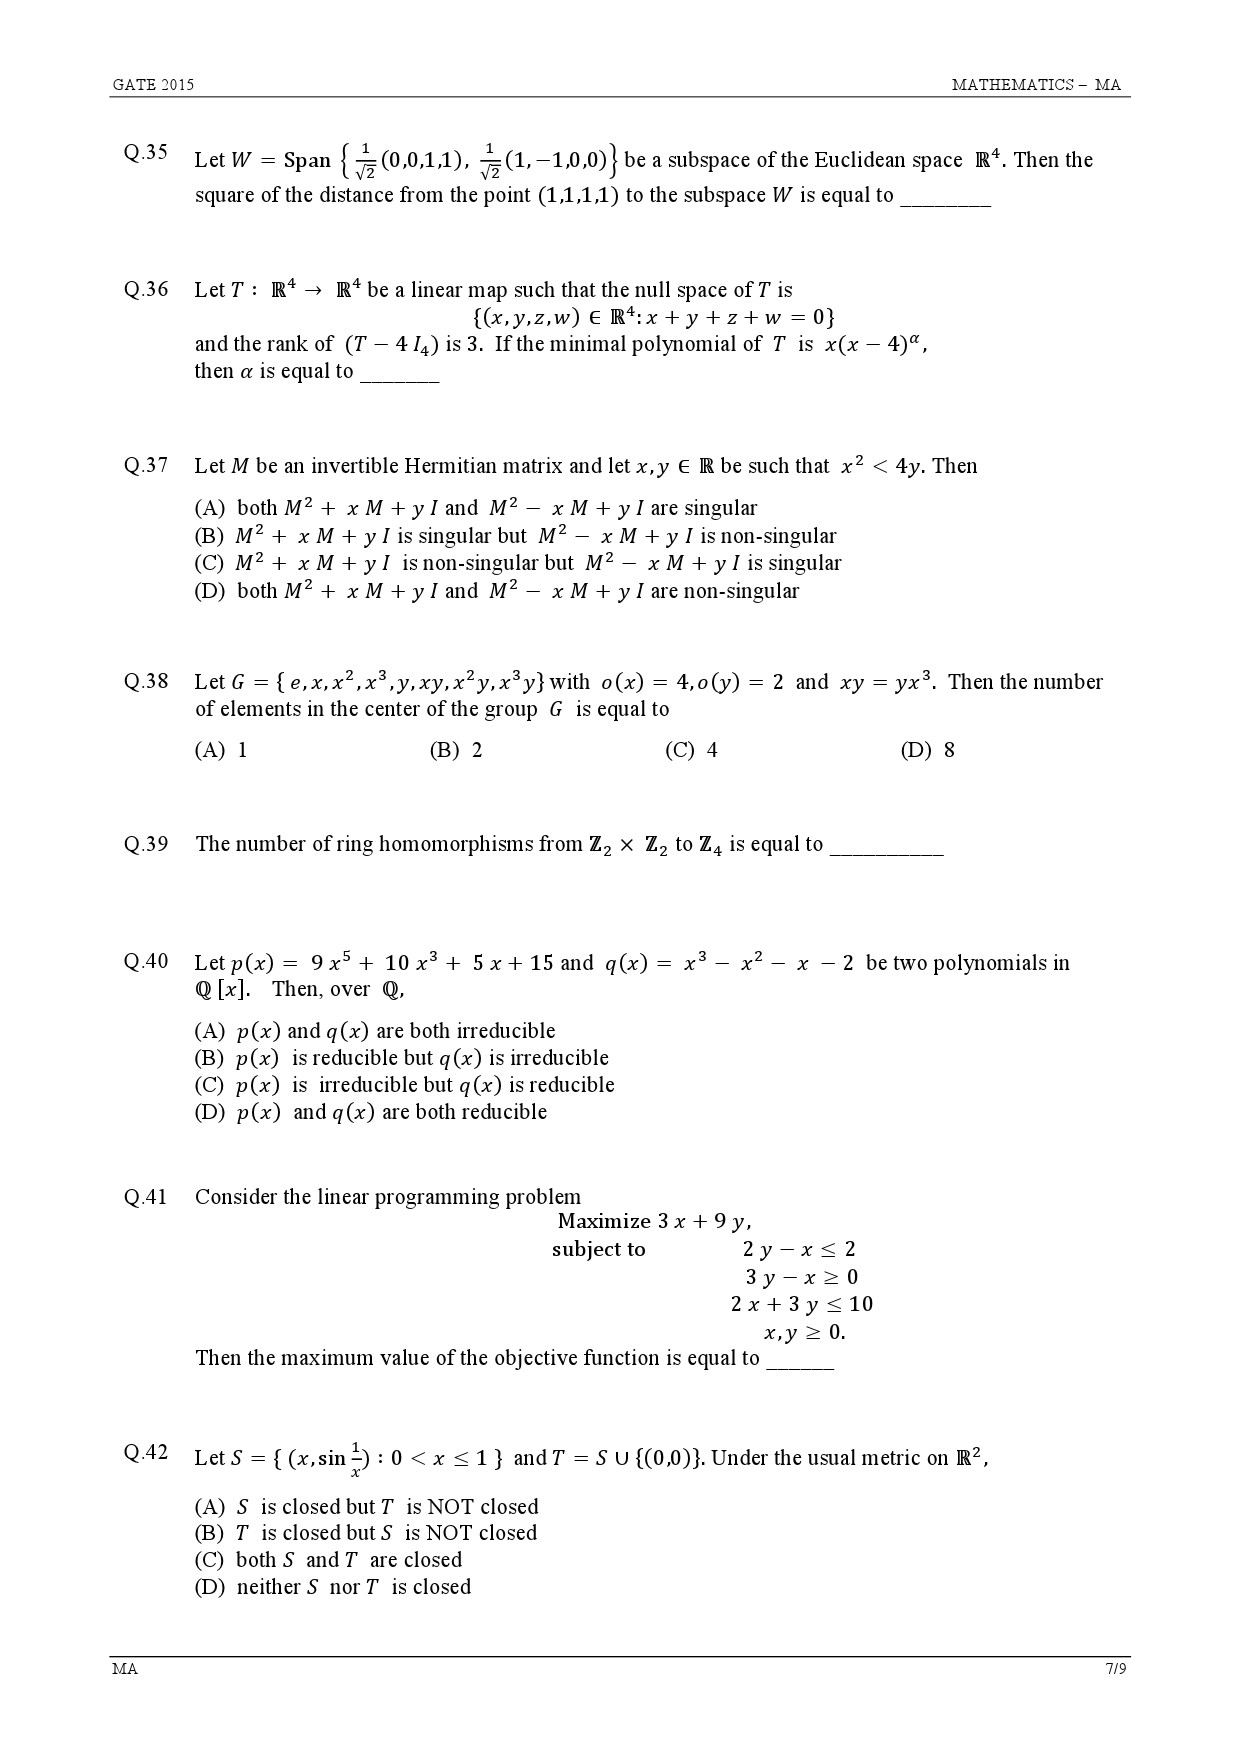 GATE Exam Question Paper 2015 Mathematics 7